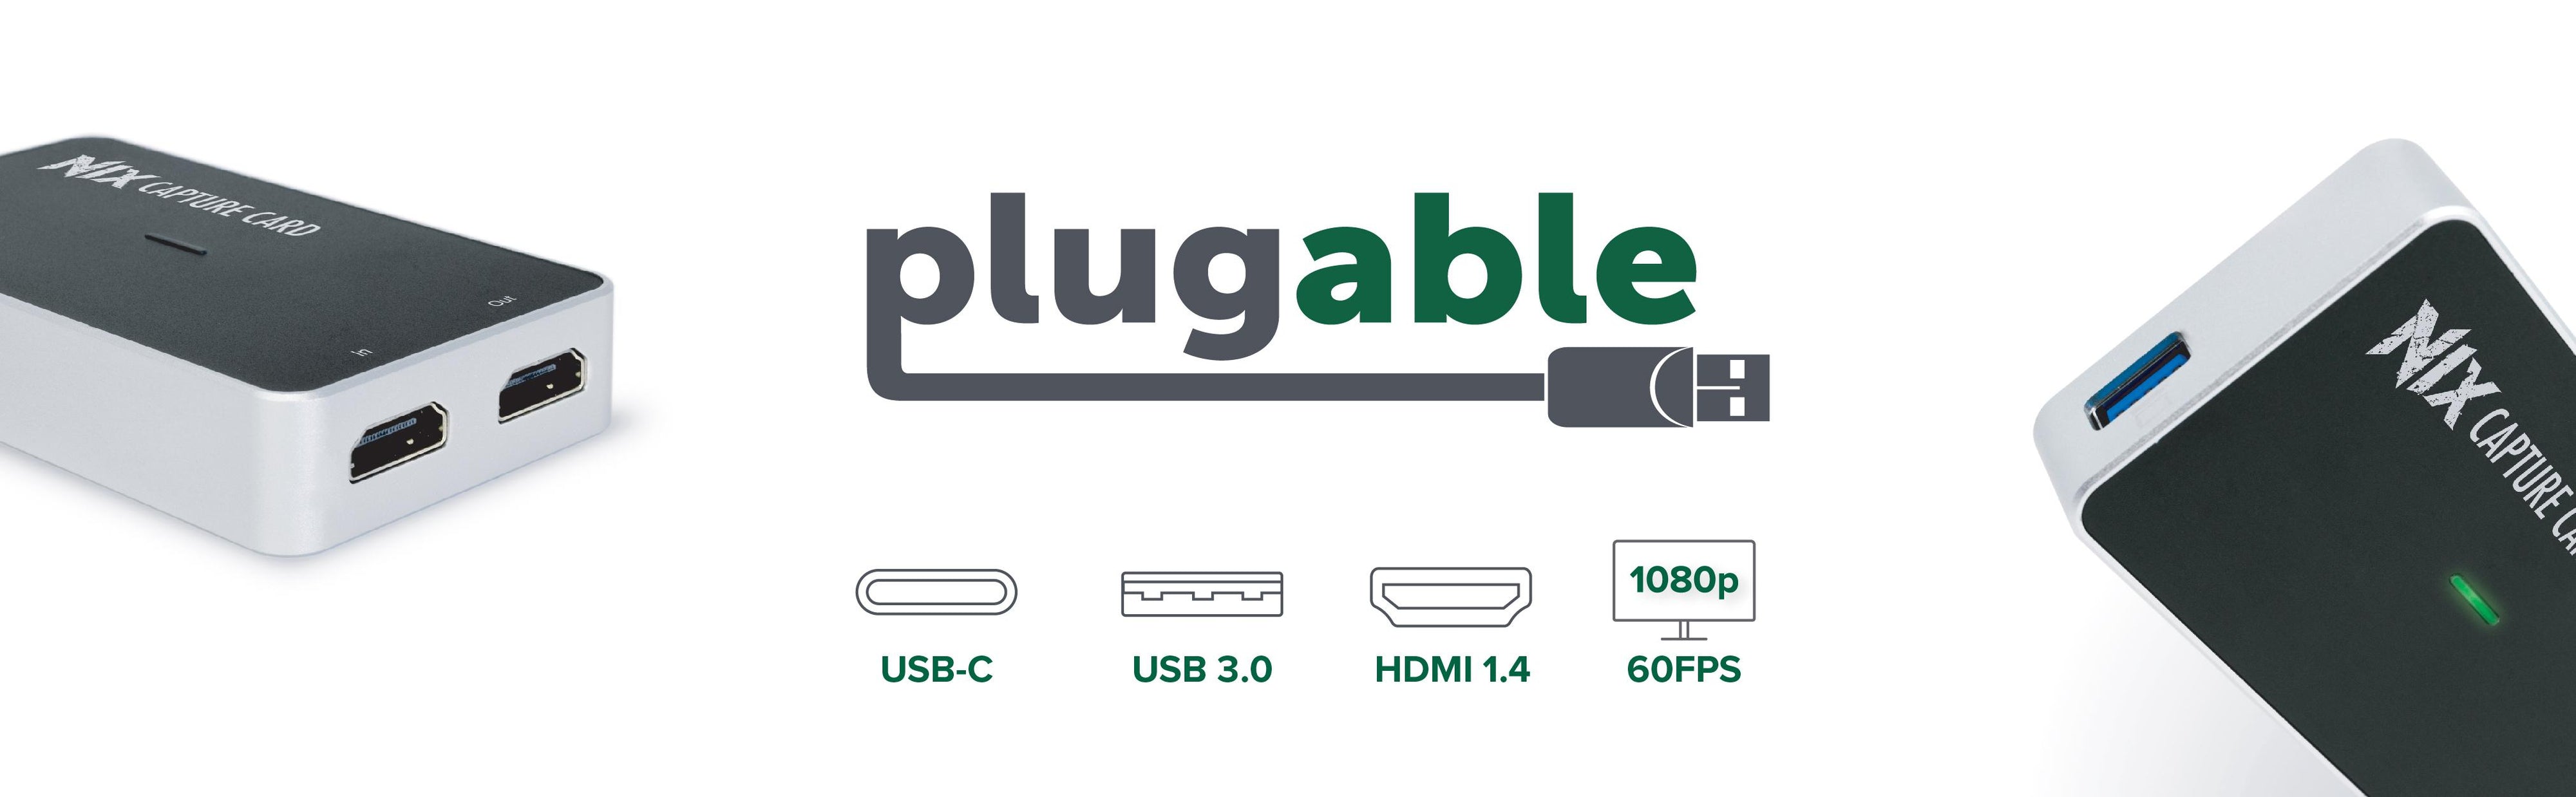 USB 3.0 HDMI Video Capture Device, 4K 30Hz Video Capture Adapter/External  USB Capture Card, UVC, Live Stream, Screen Recorder, Works w/ USB-A, USB-C